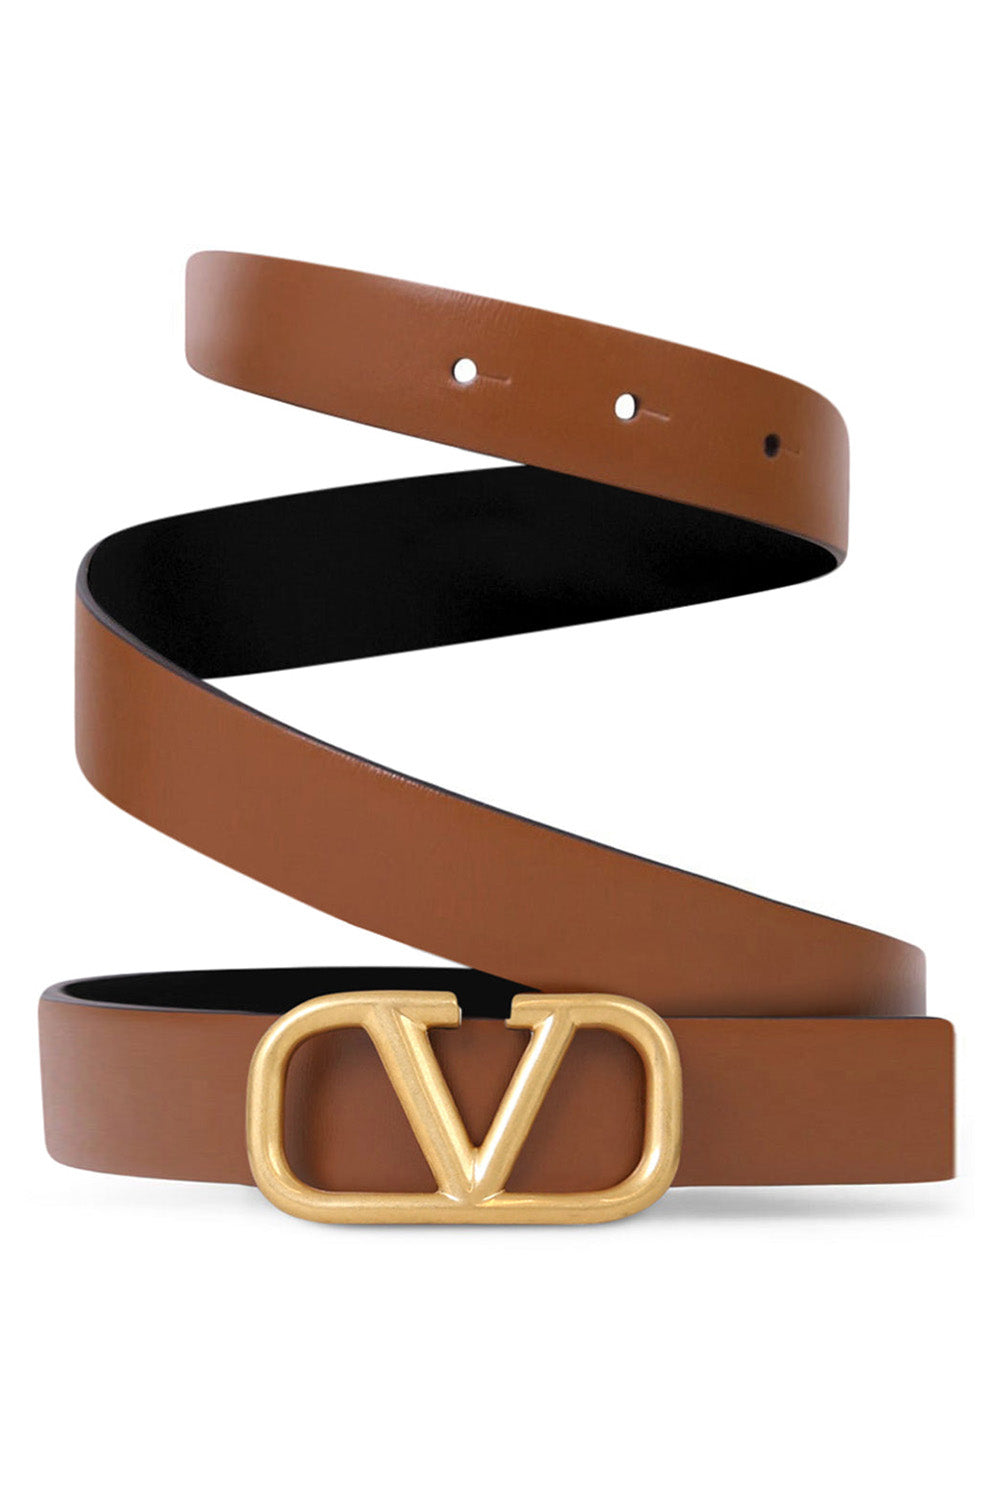 Designer Belts For Women Australia, Buy Luxury Belts